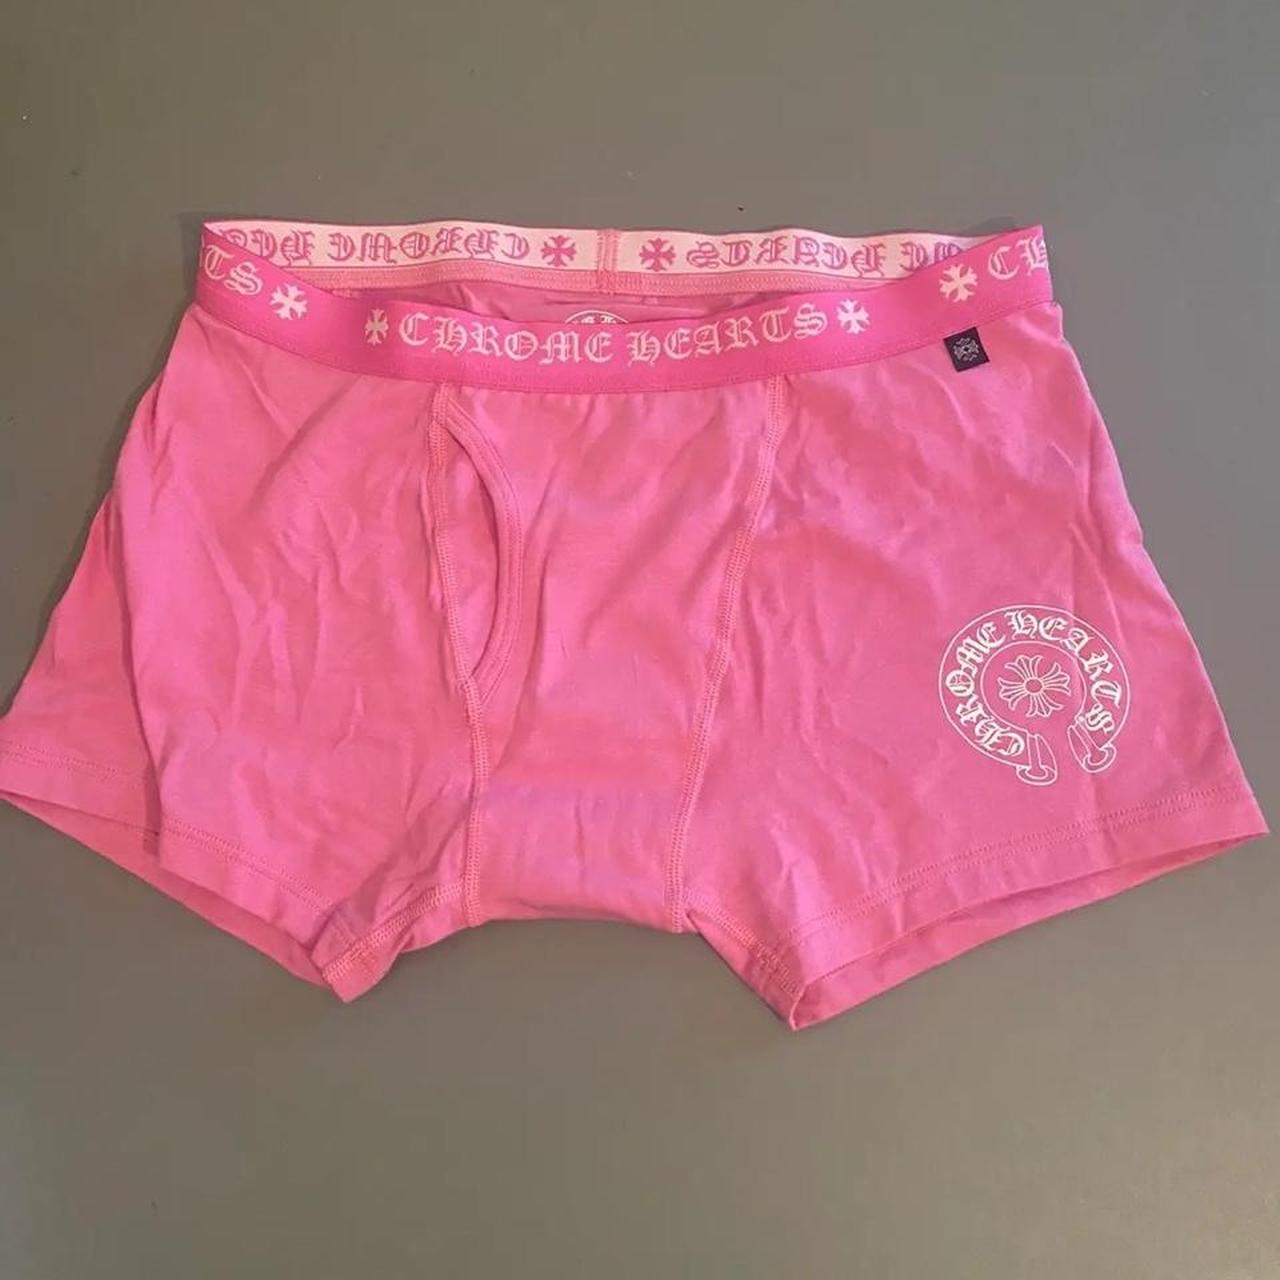 chrome heart pink boxer shorts!!, •🛑still debating if